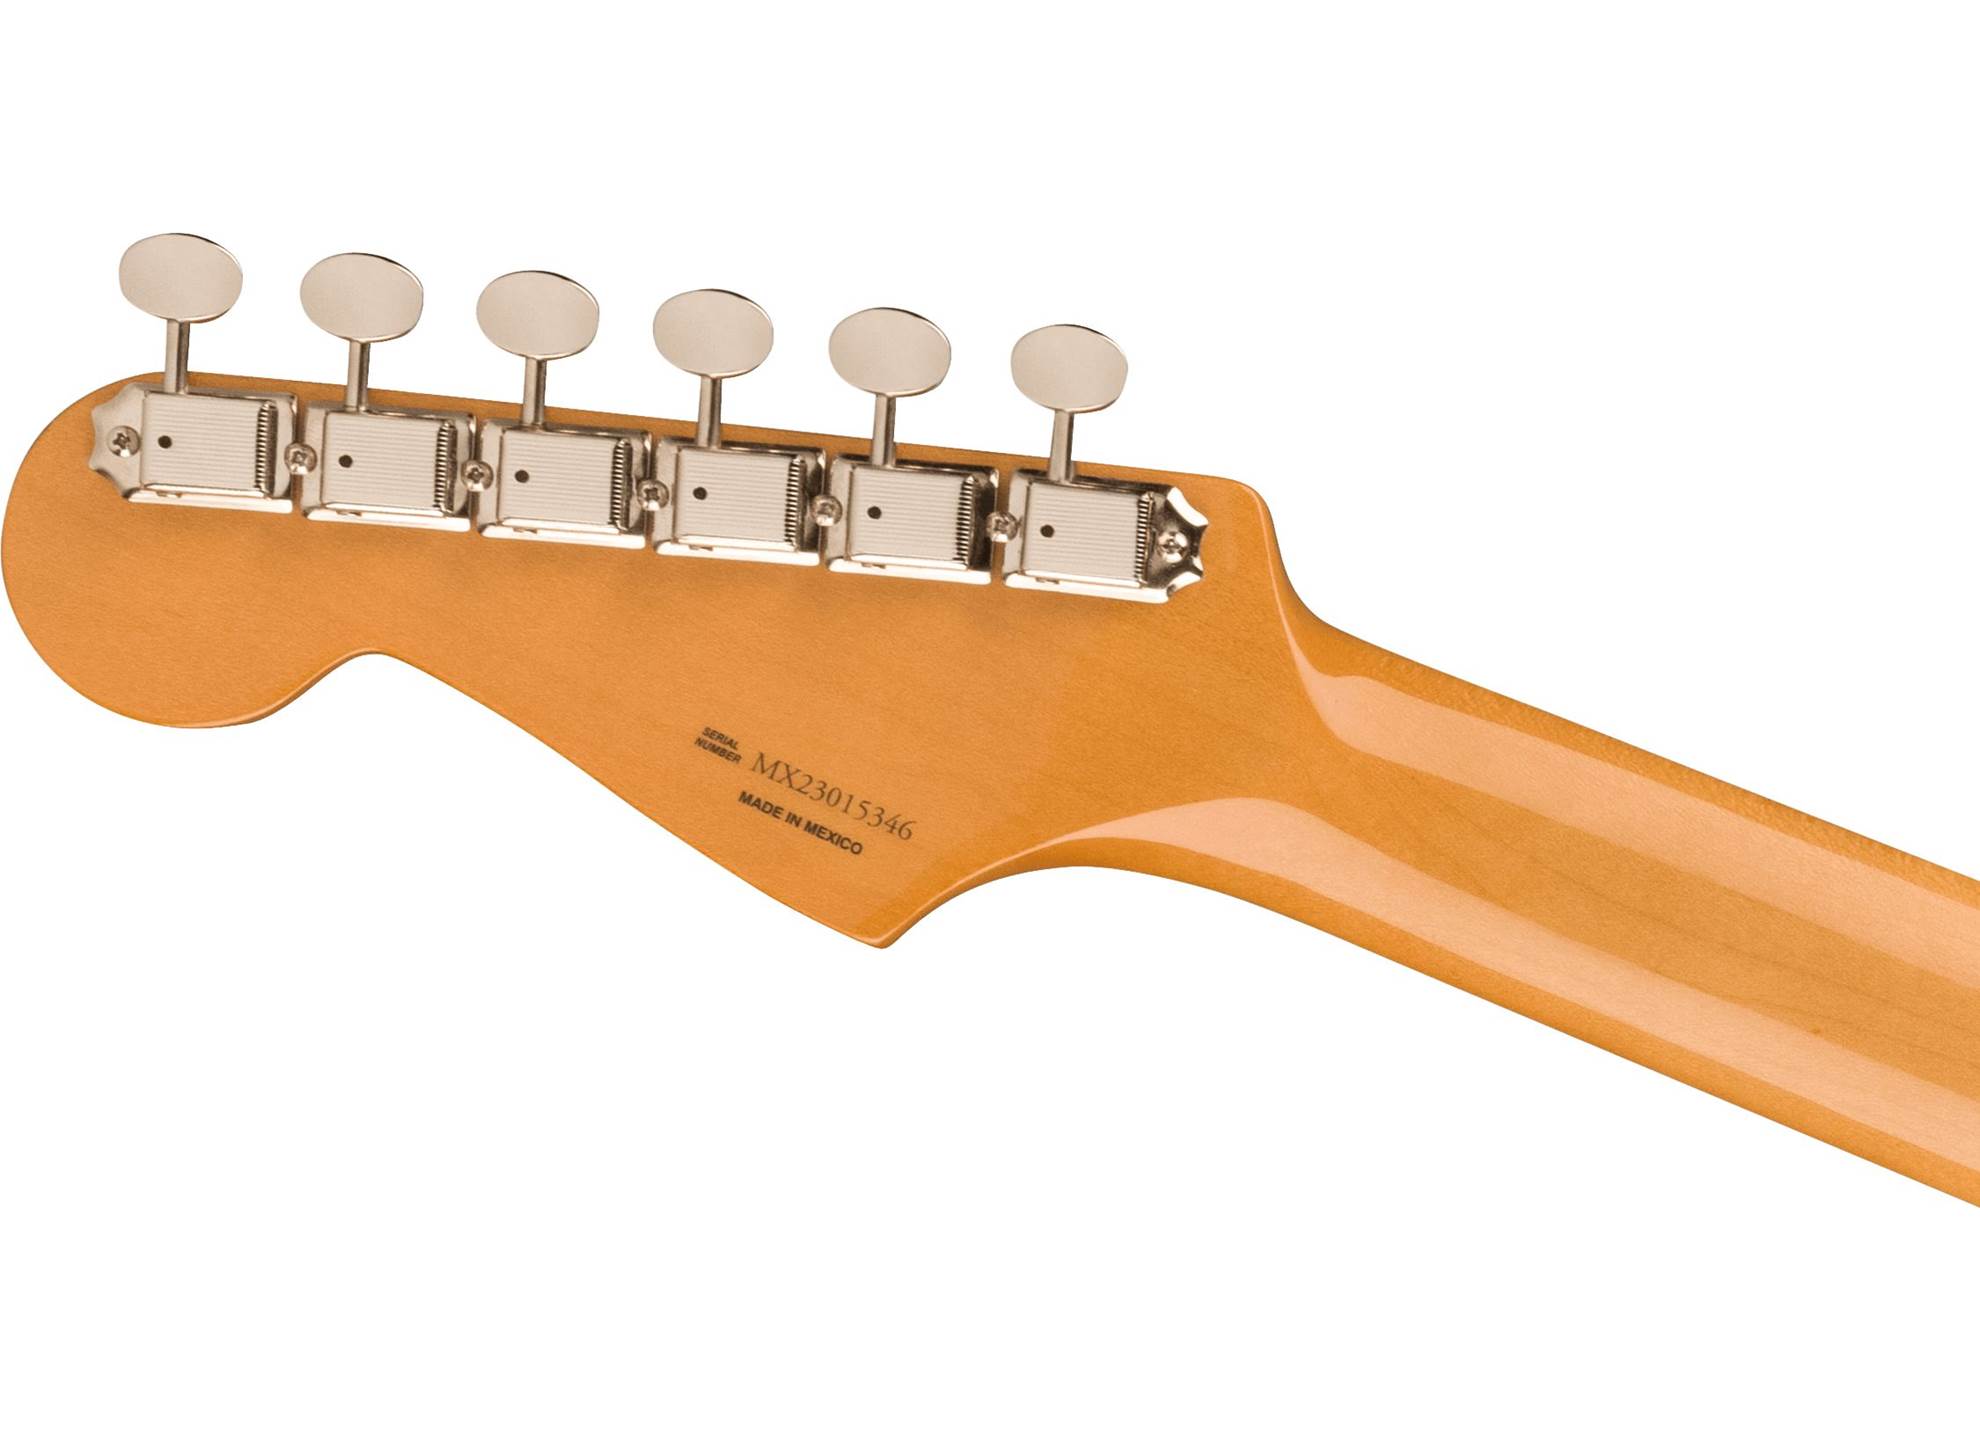 Vintera II 60s Stratocaster 3-Color Sunburst